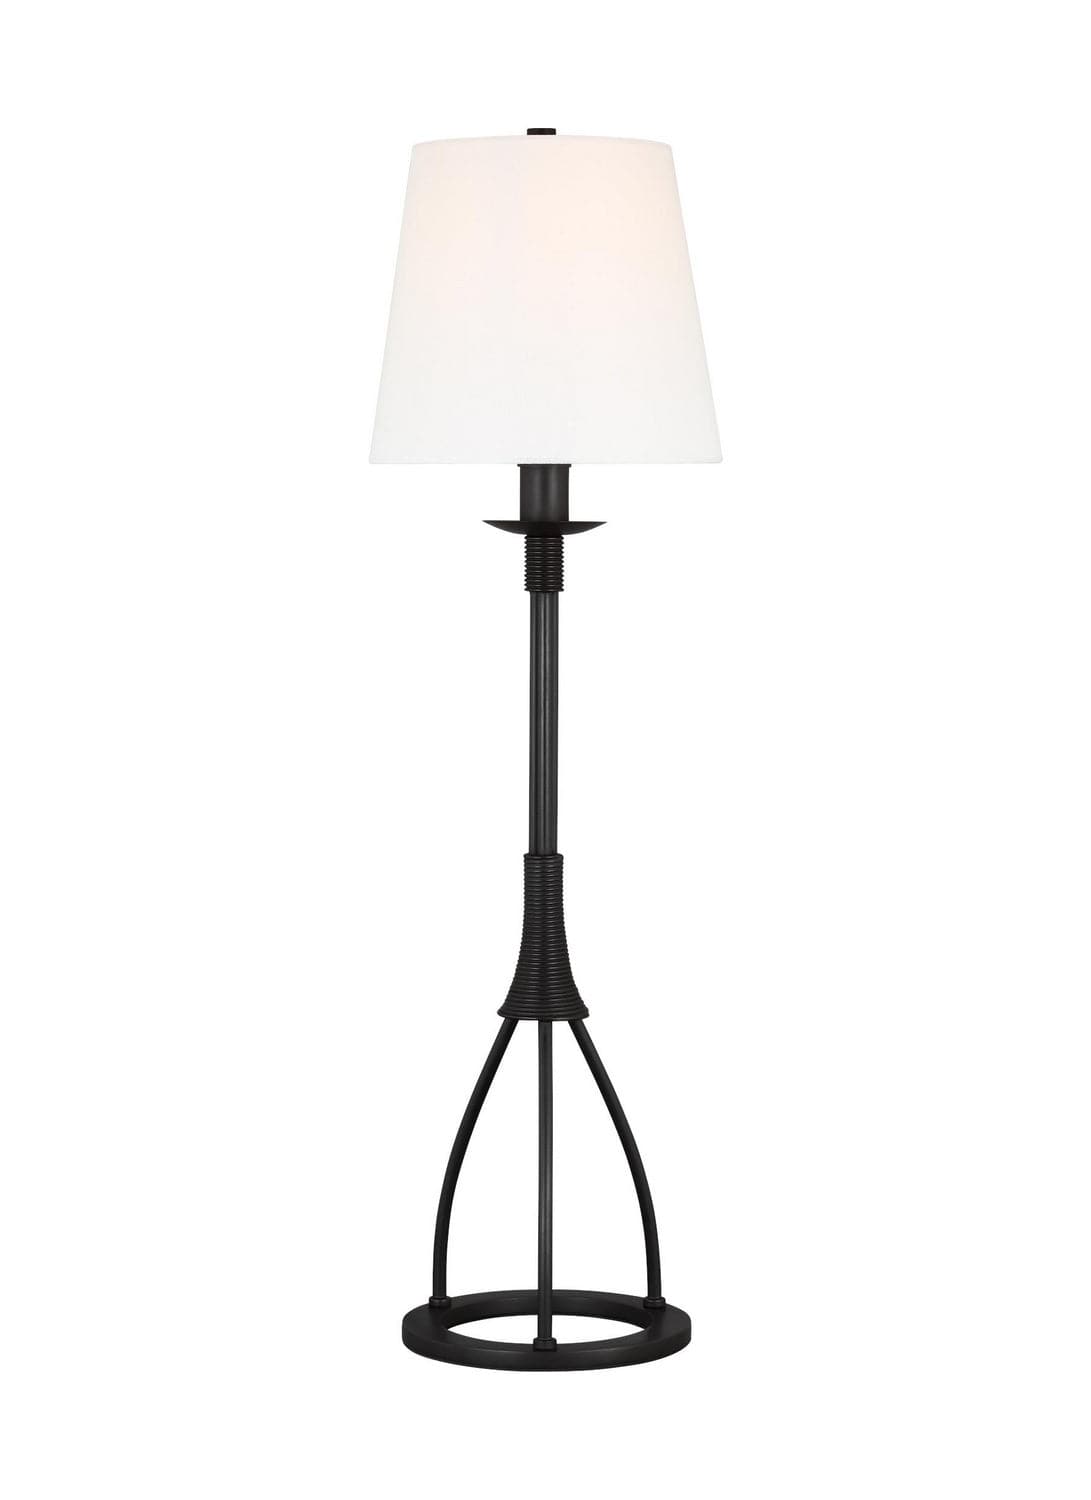 Visual Comfort Studio - LT1171AI1 - One Light Buffet Lamp - Sullivan - Aged Iron